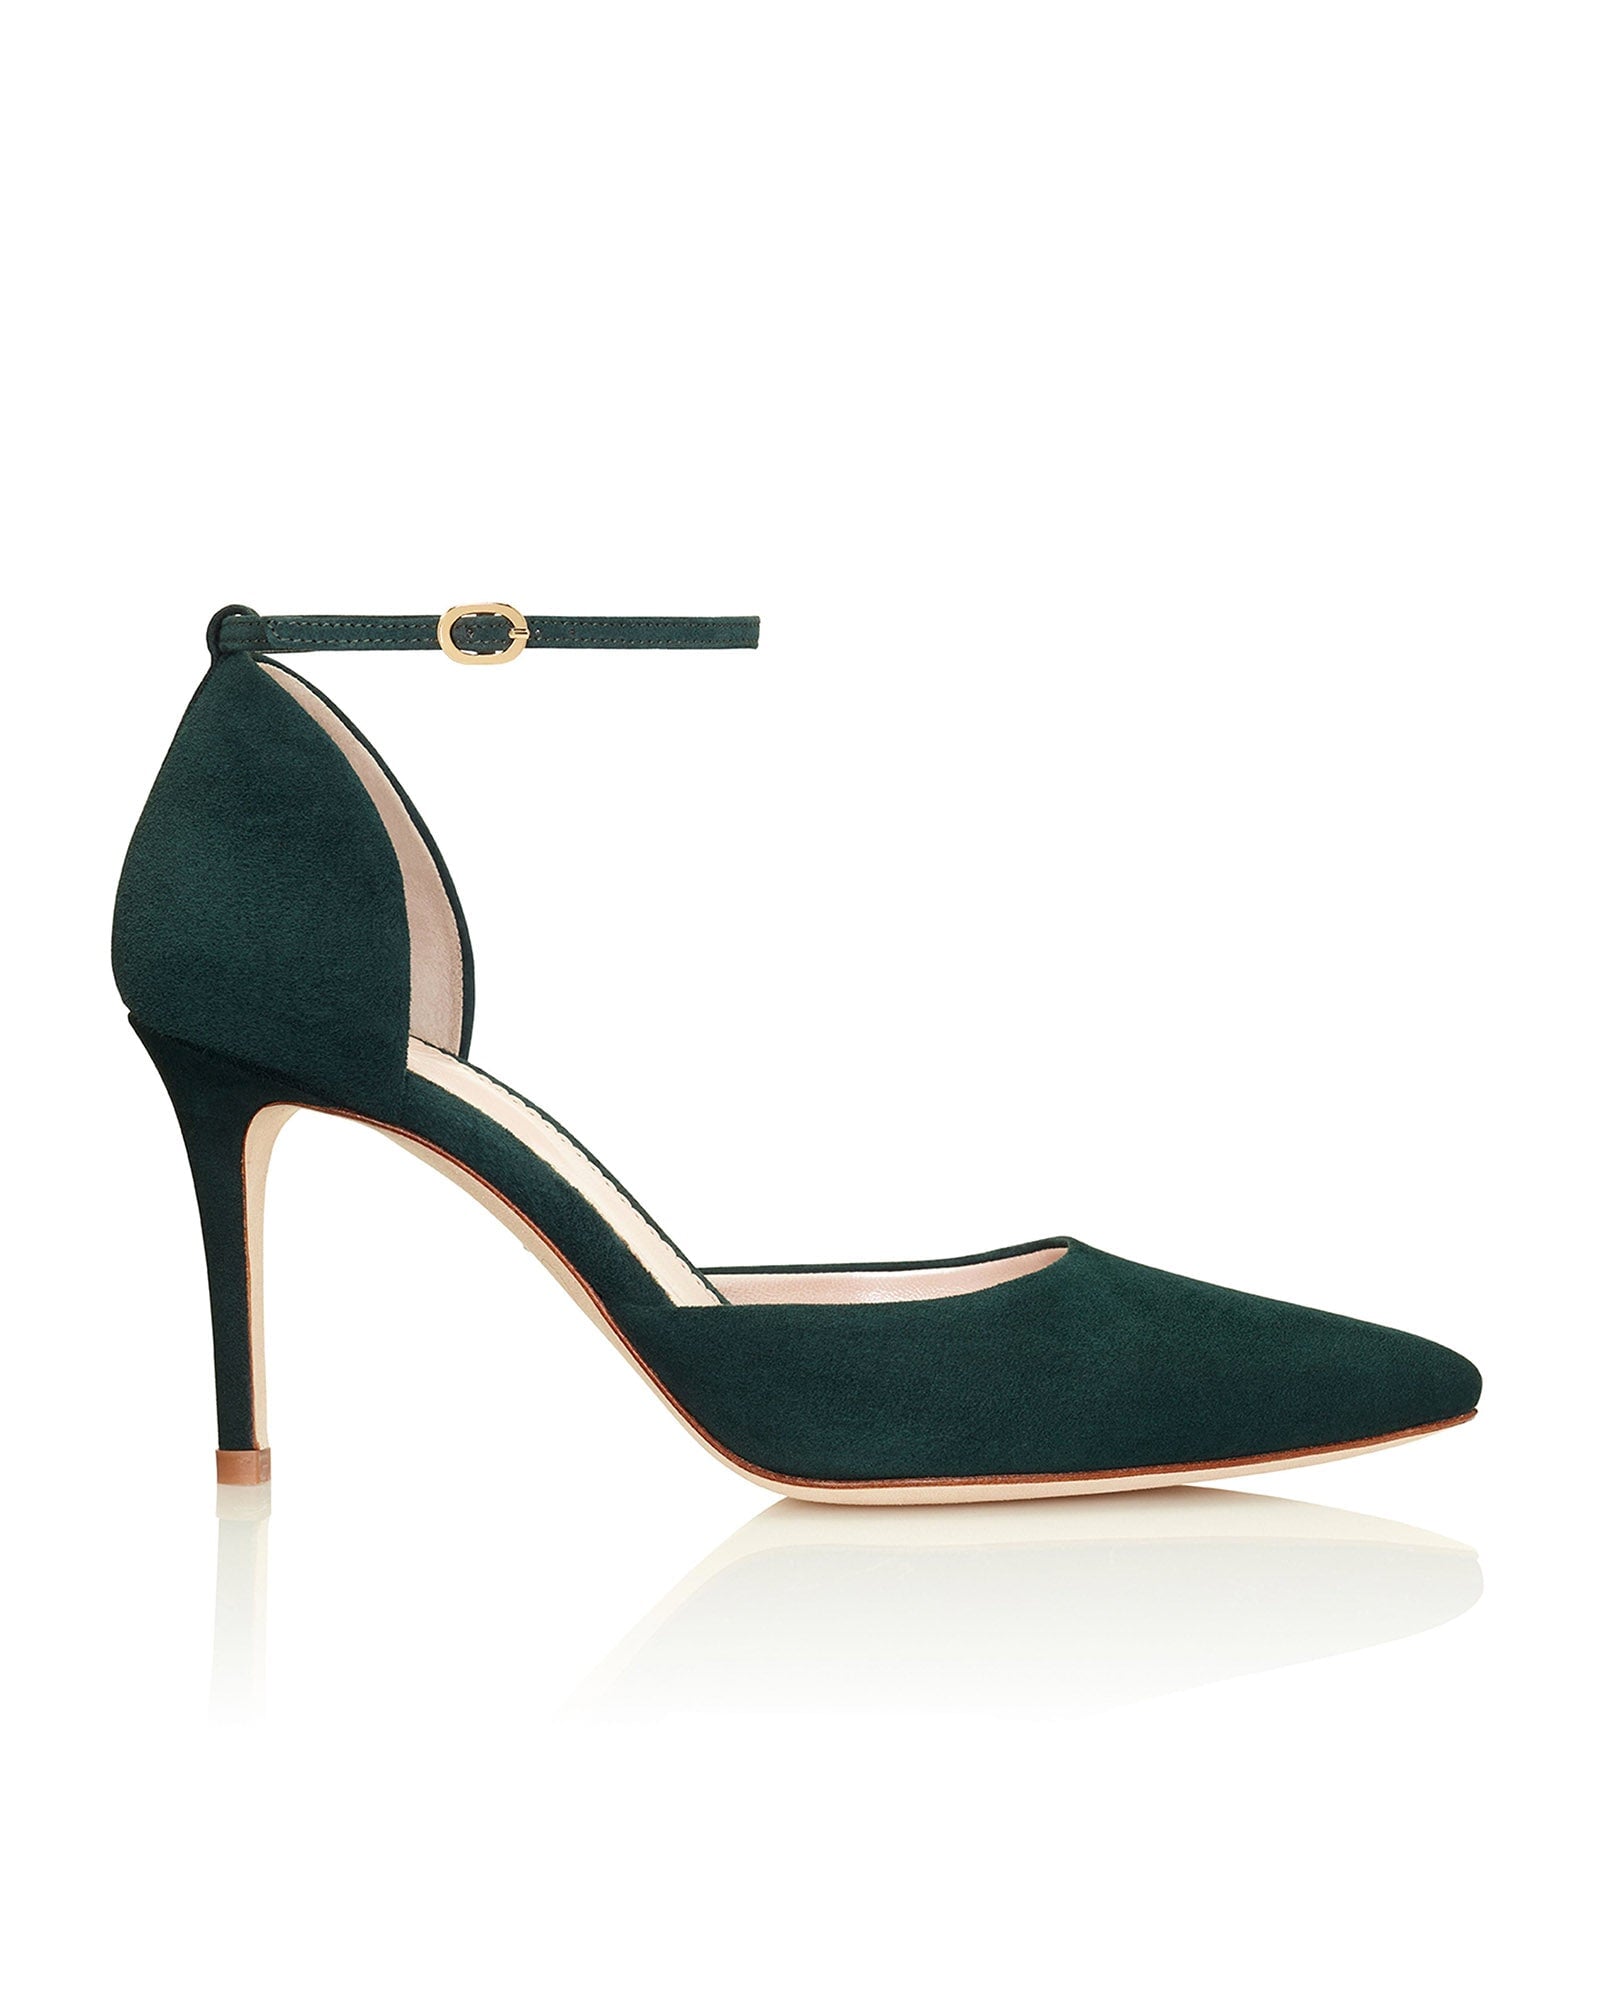 Harriet Greenery Fashion Shoe Dark Green Suede Court Shoes  image